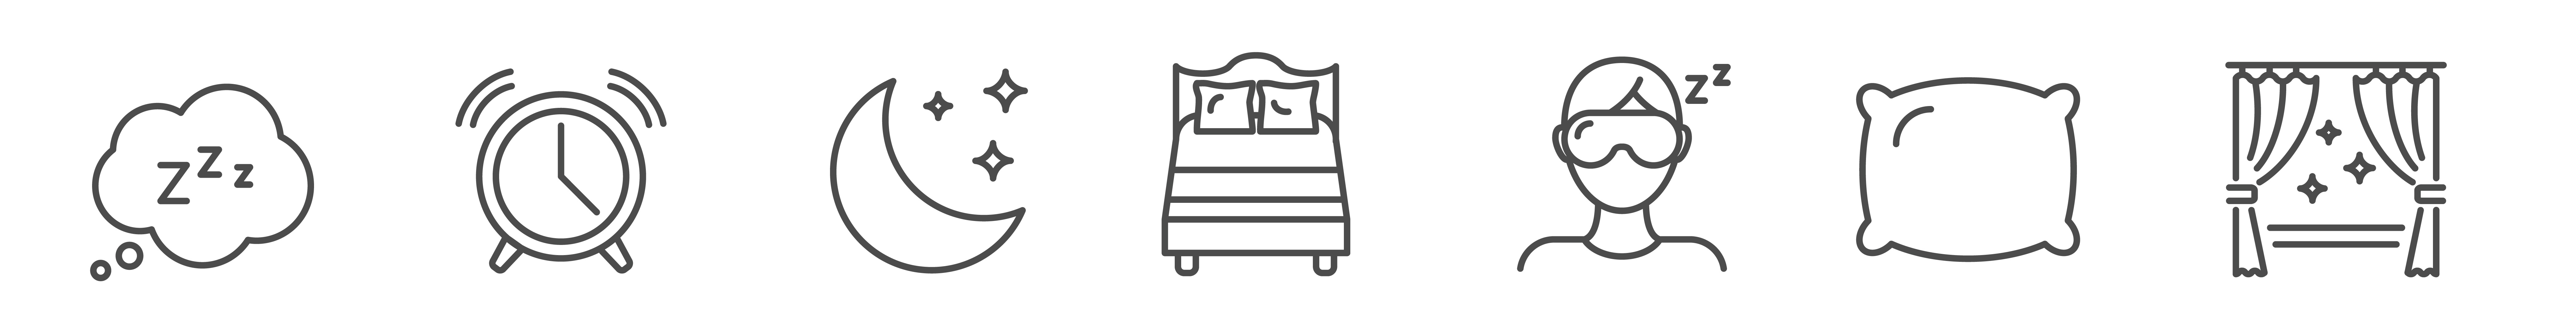 a row of icons illustrating sleep